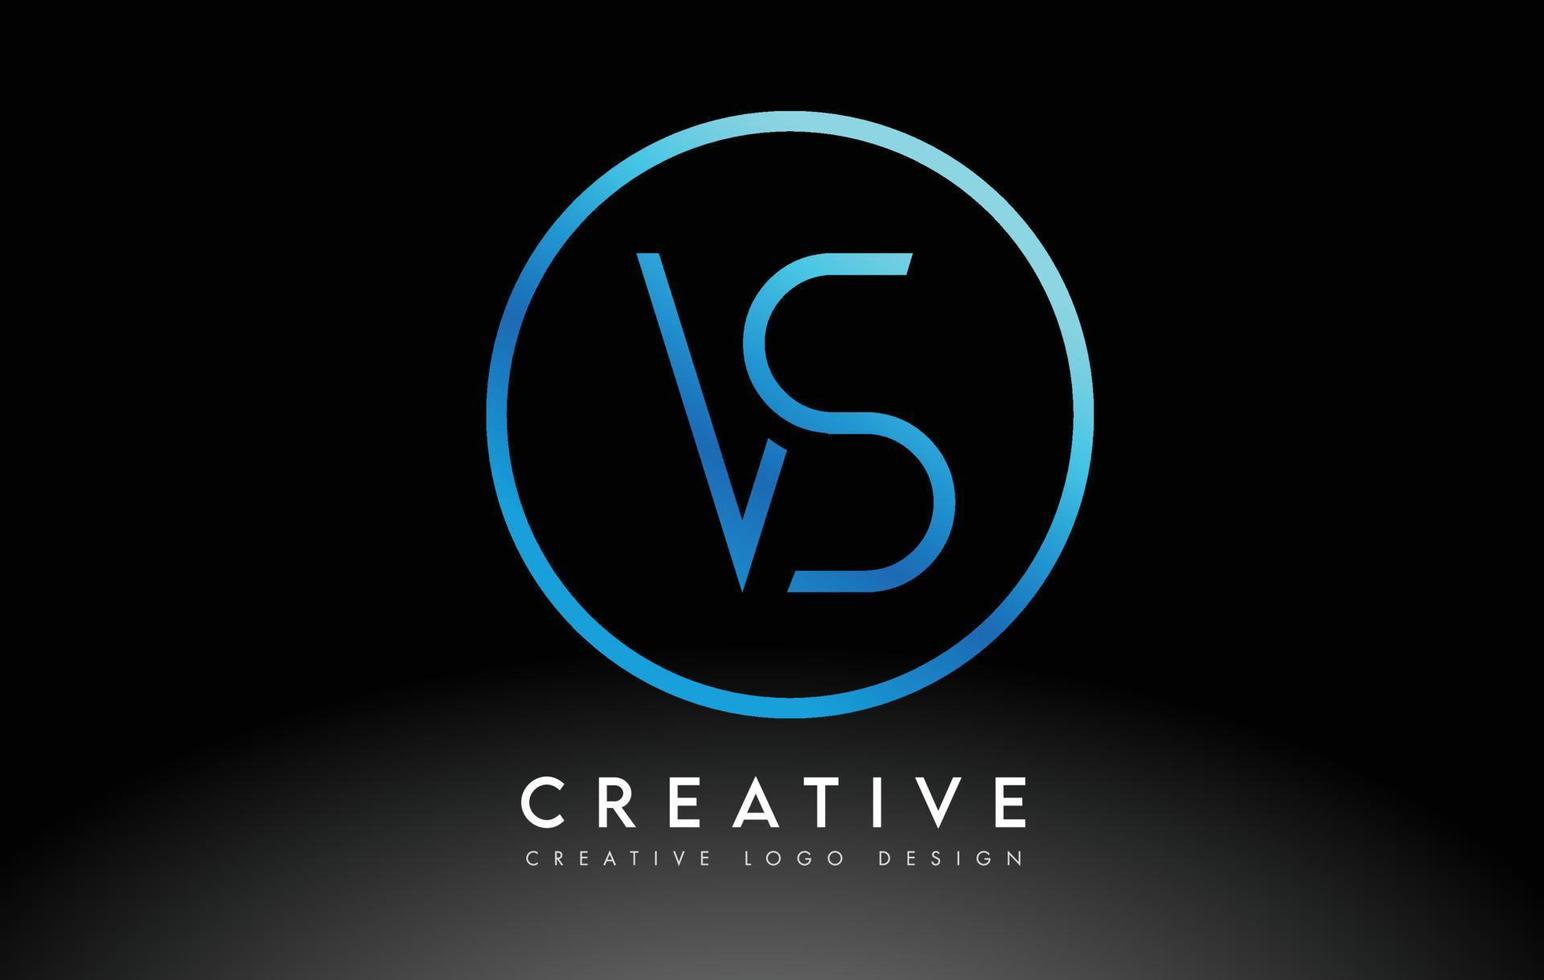 diseño de logotipo de letras azul neón vs delgado. concepto creativo simple carta limpia. vector